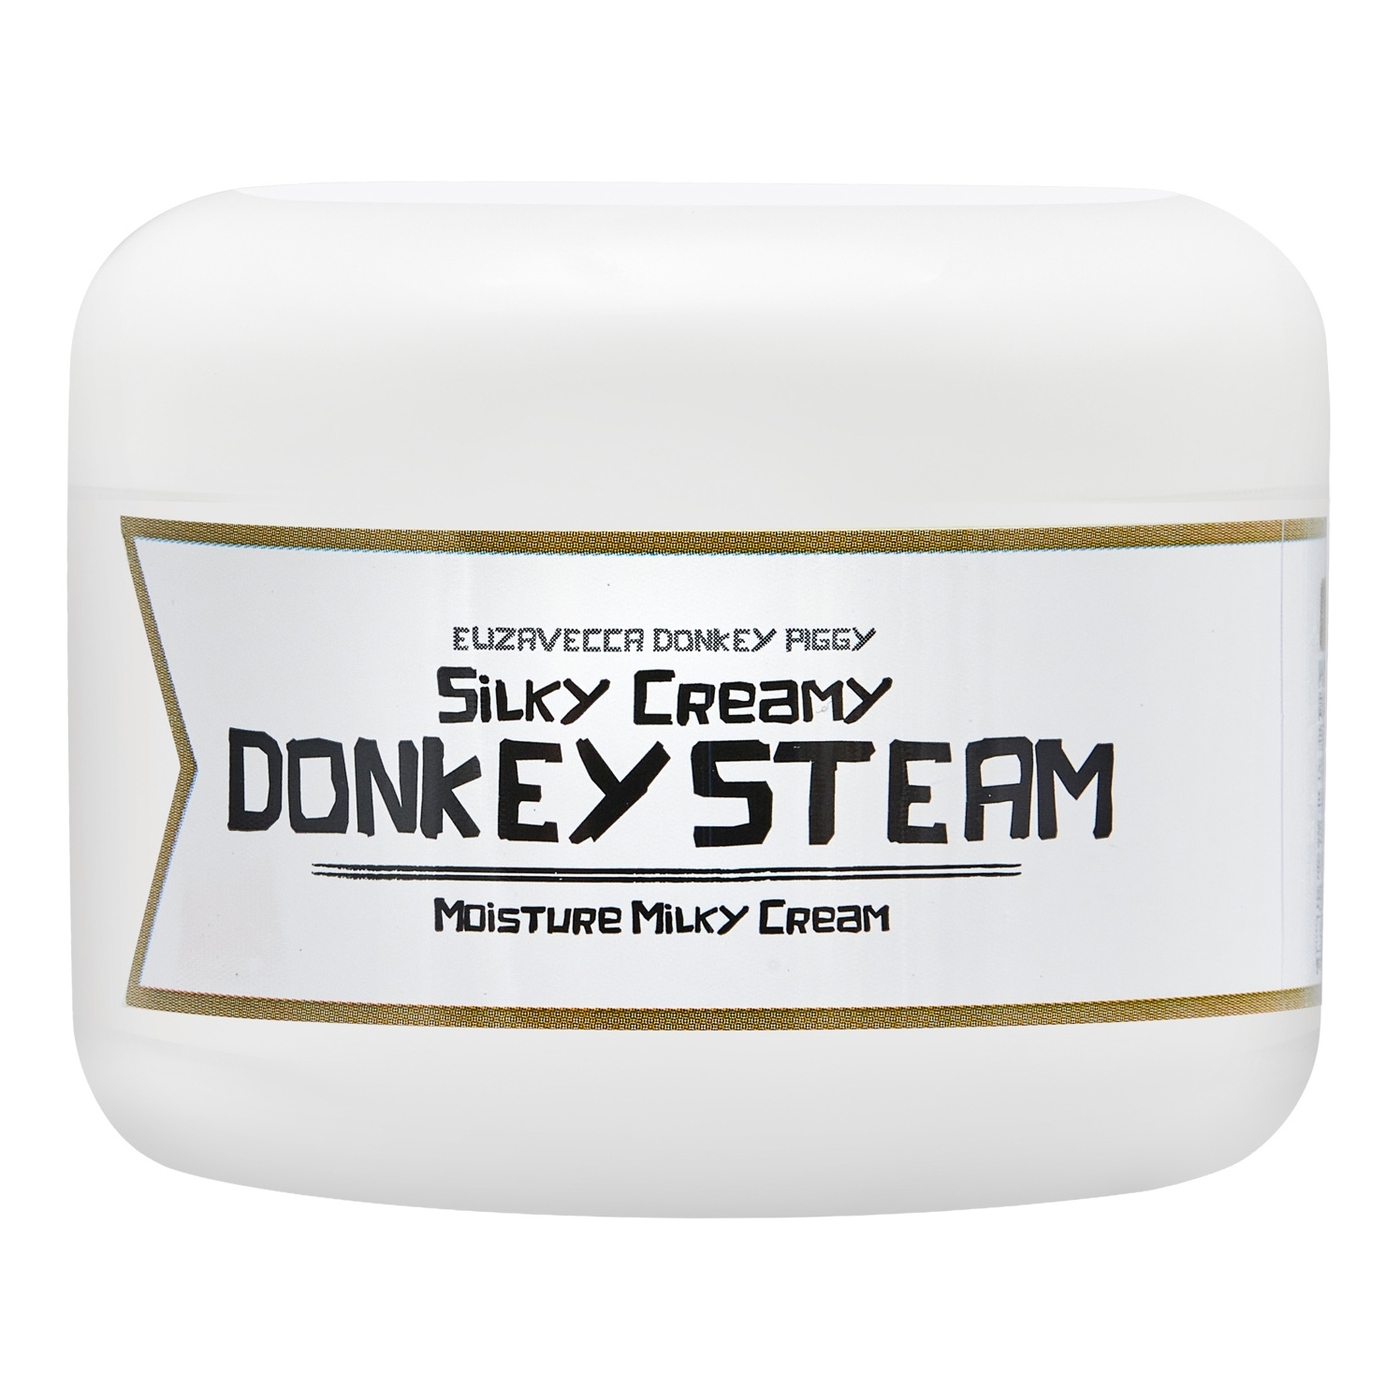 Silky creamy donkey steam cream moisture milky cream фото 27